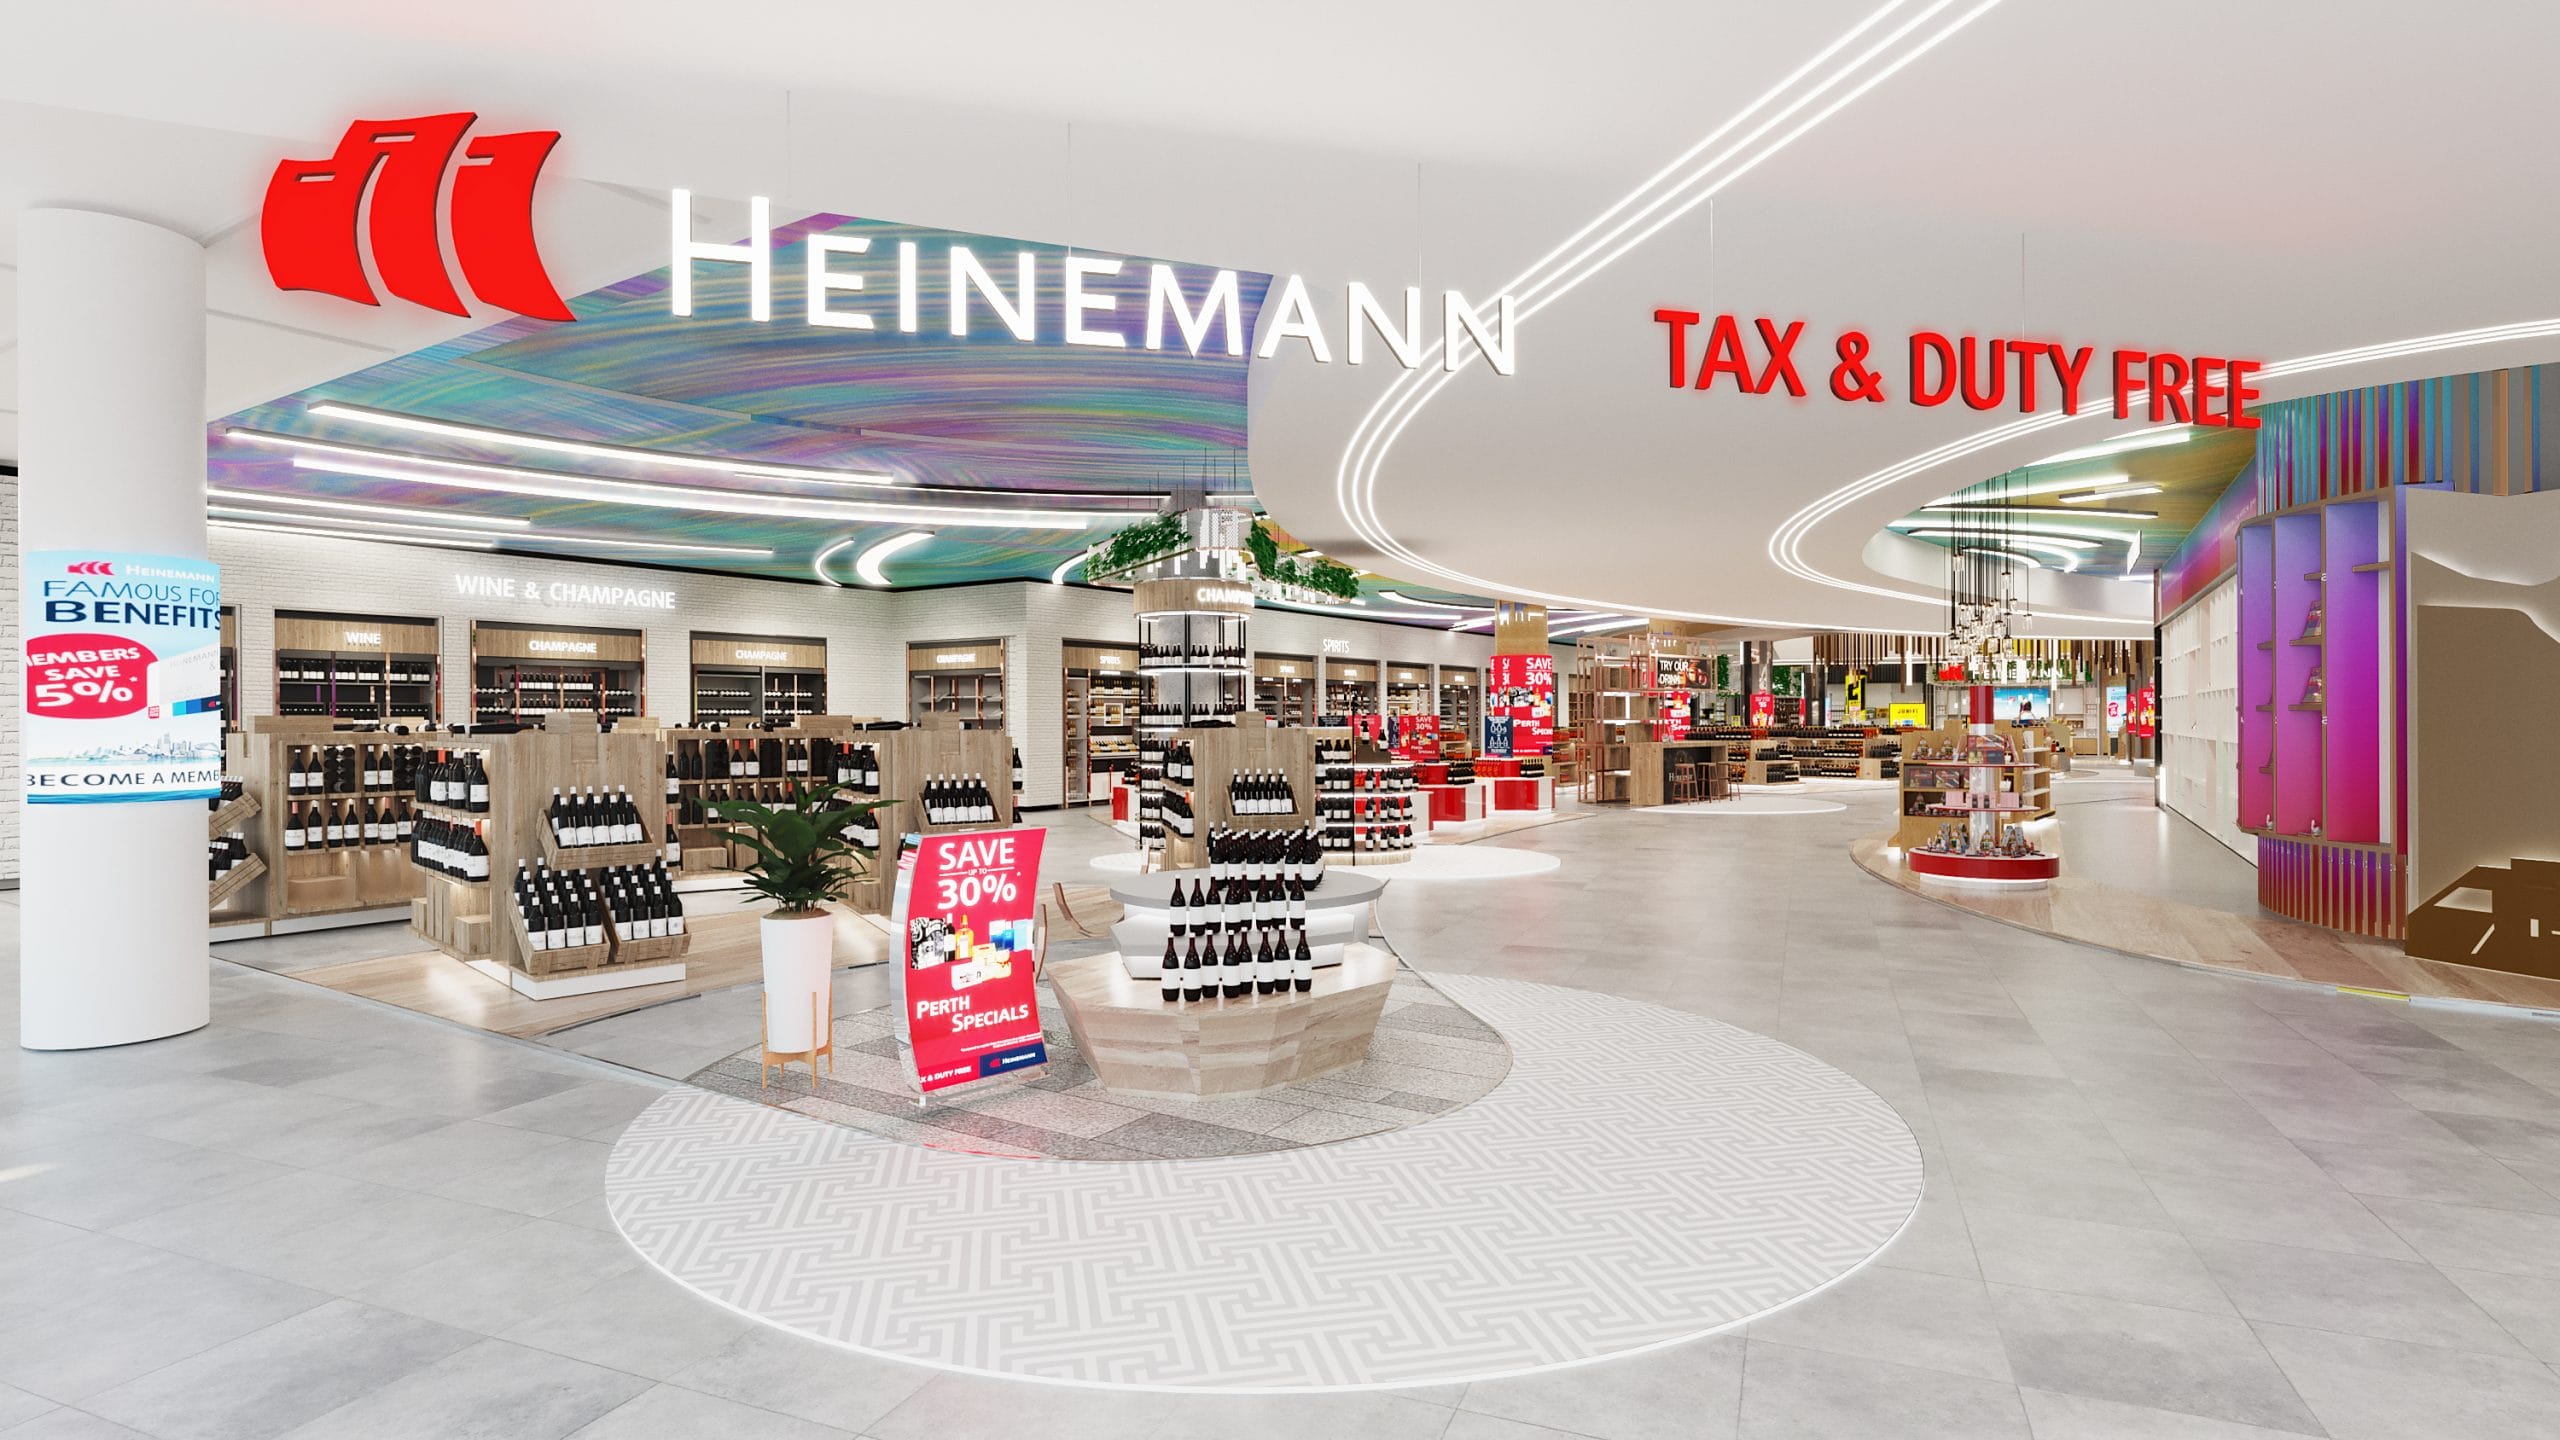 Heinemann Australia extends partnership with Sydney Airport - Retail in Asia